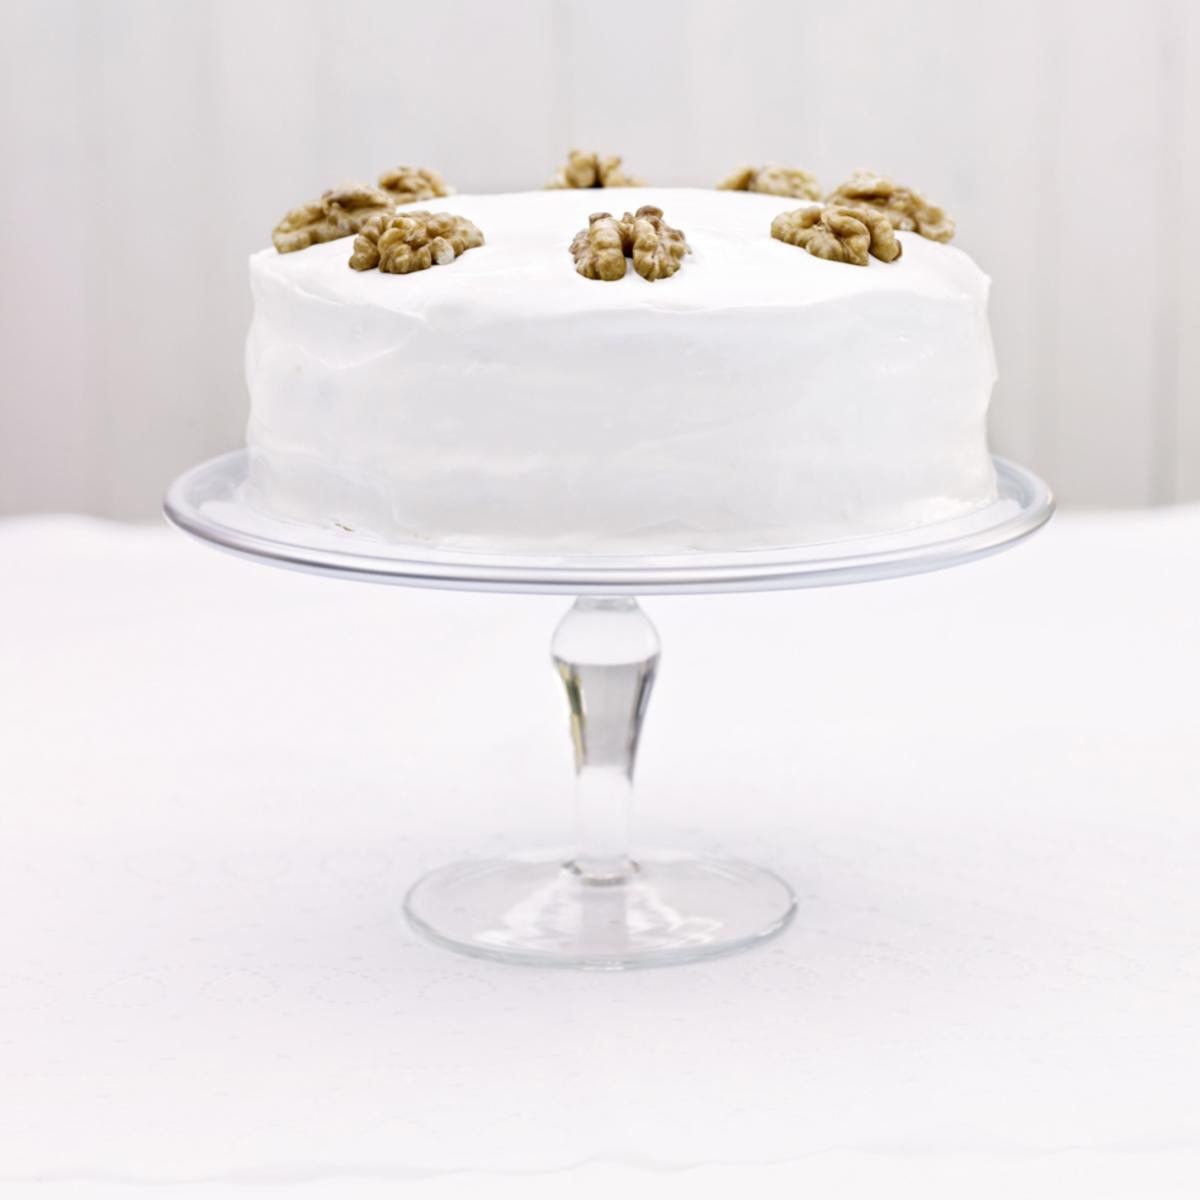 https://www.deliaonline.com/sites/default/files/styles/square/public/quick_media/cakes-iced-english-walnut-cake.jpg?c=6a5c8af26ecd9d43d773666bd0481d66